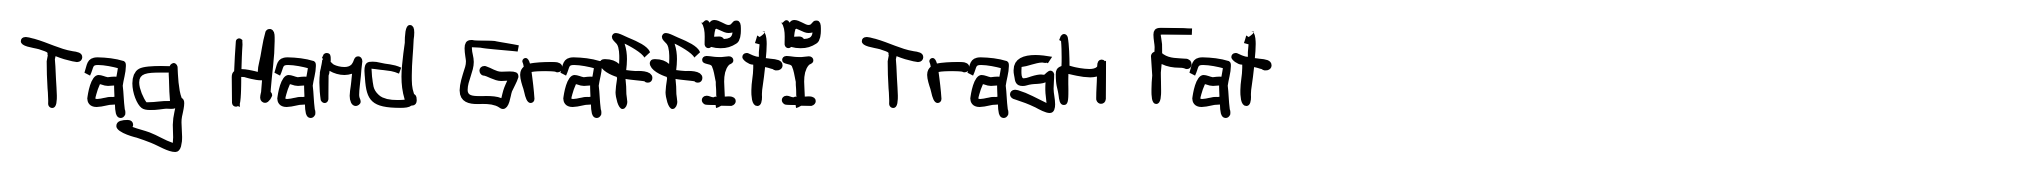 Tag Hand Graffiti Trash Fat image